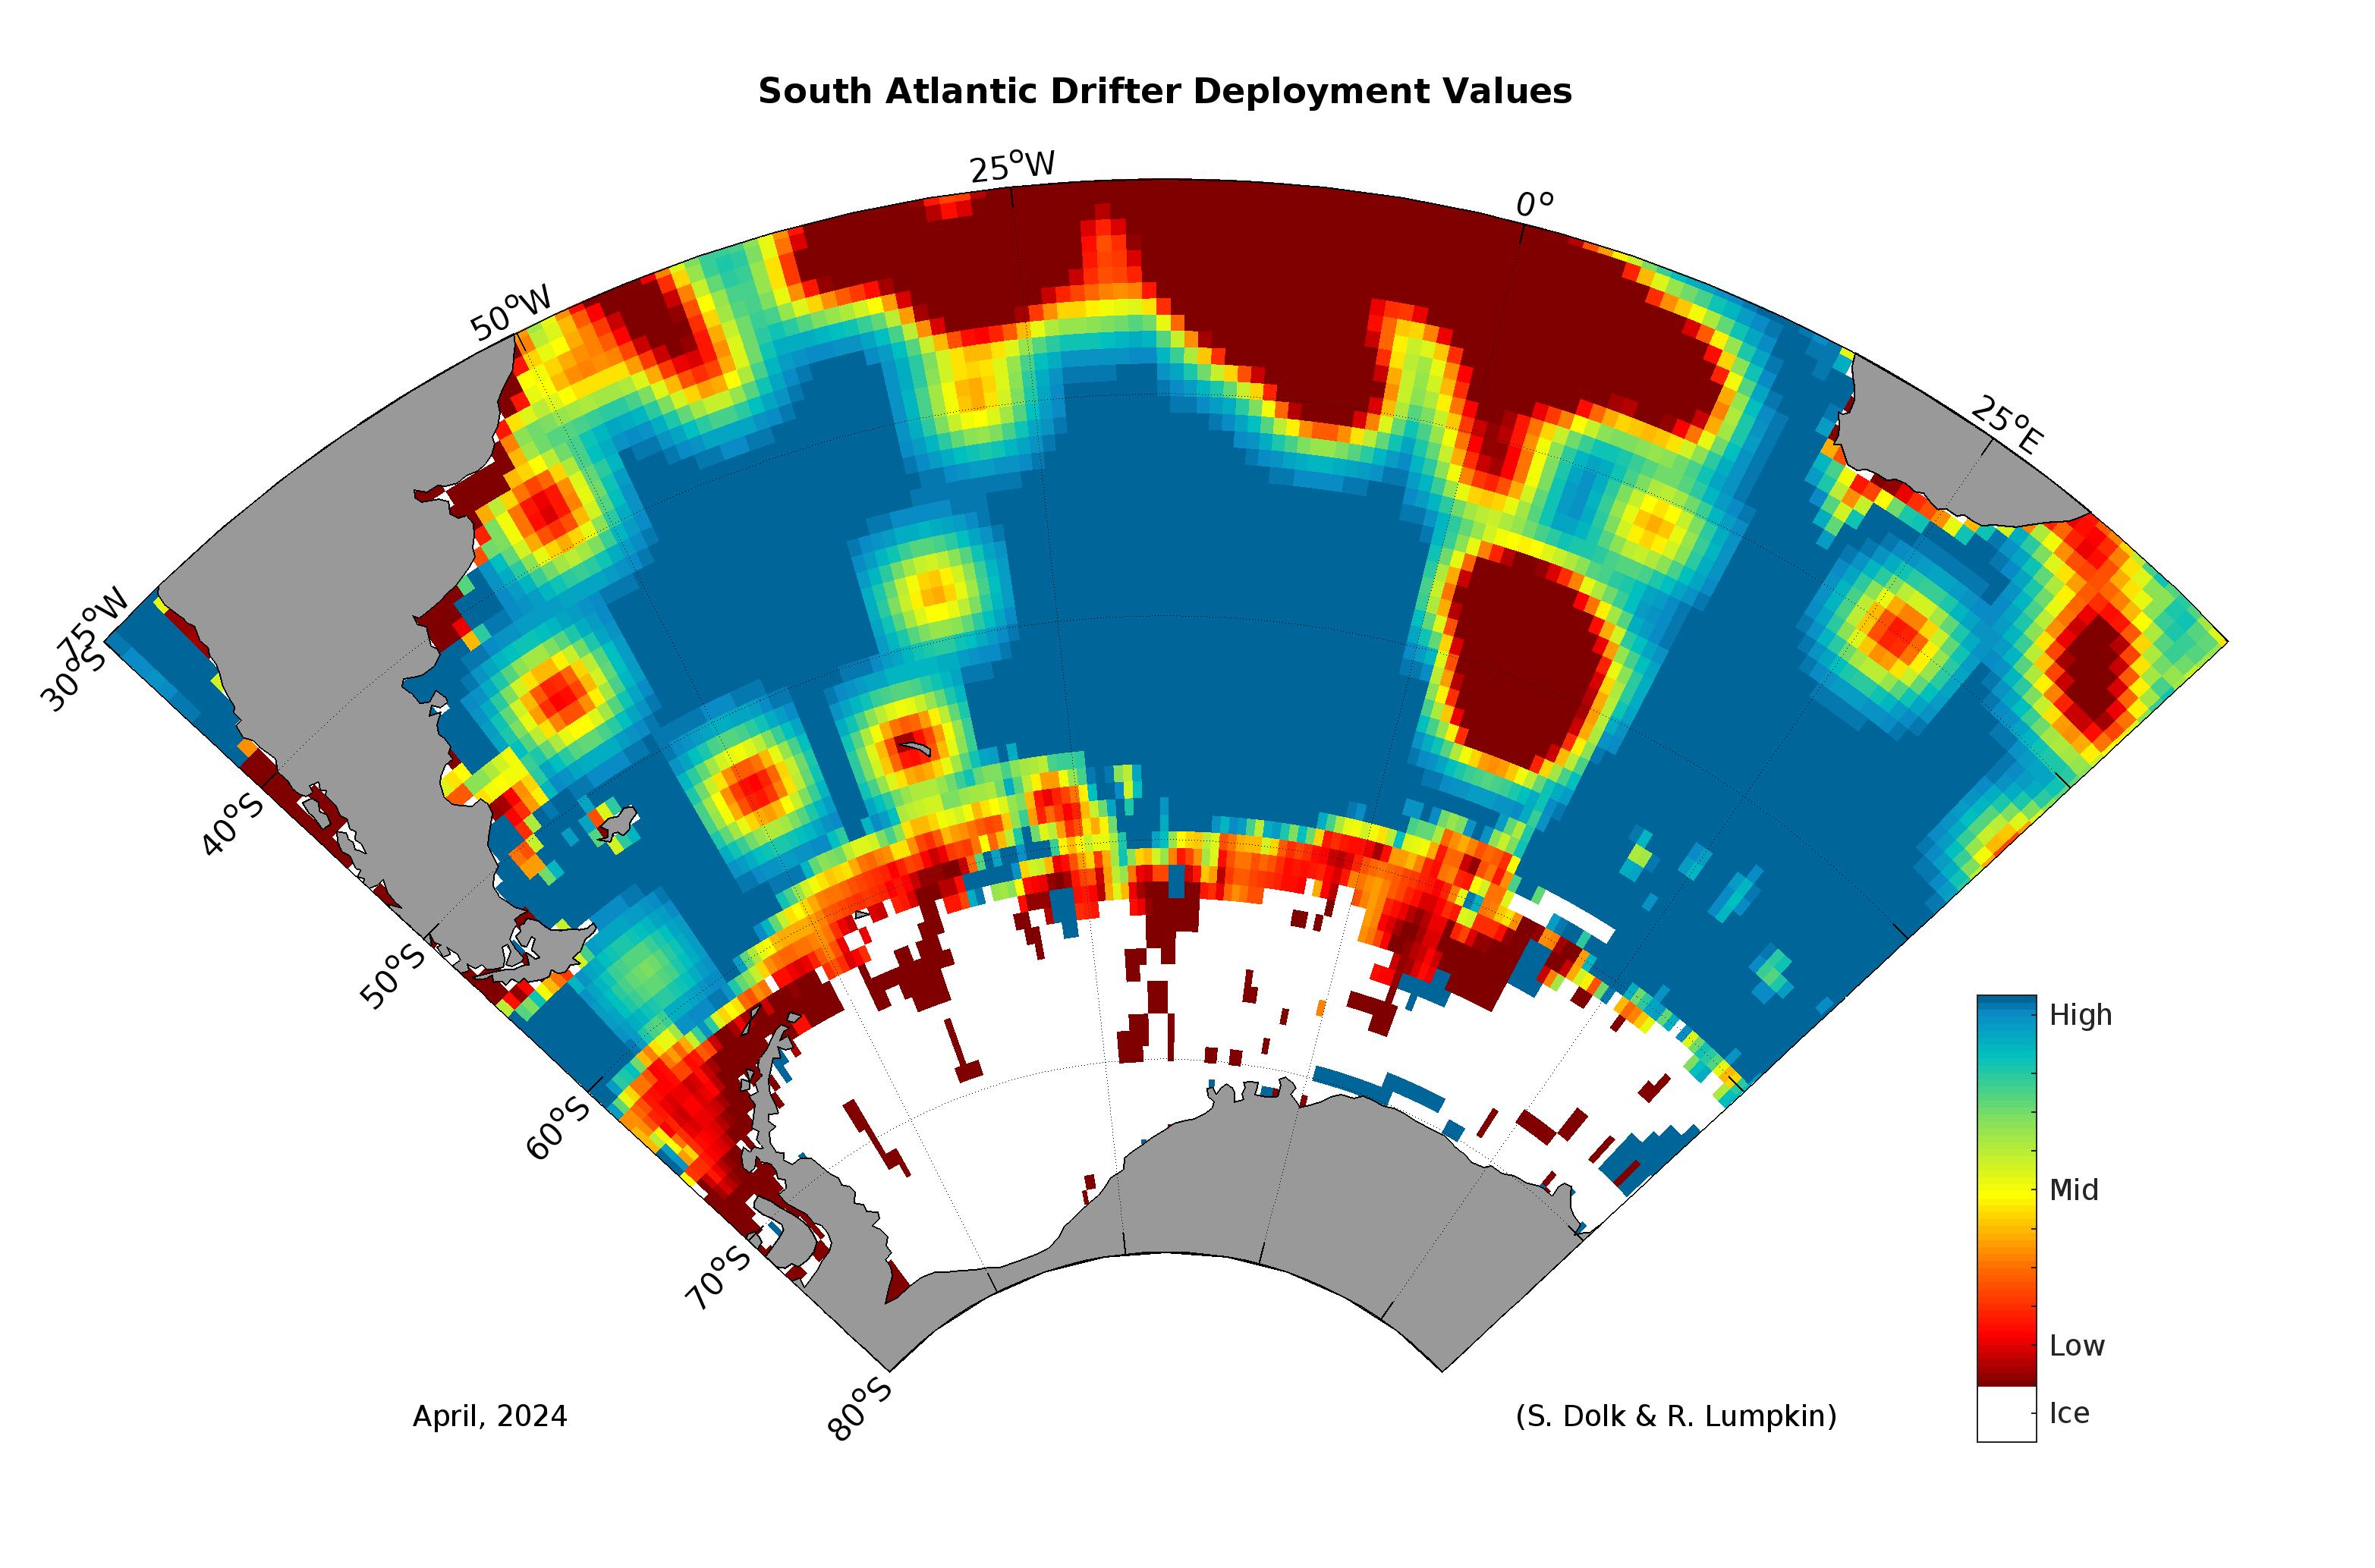 Global Drifter Program South Atlantic Deployment Value Map. Image Credit: NOAA. 